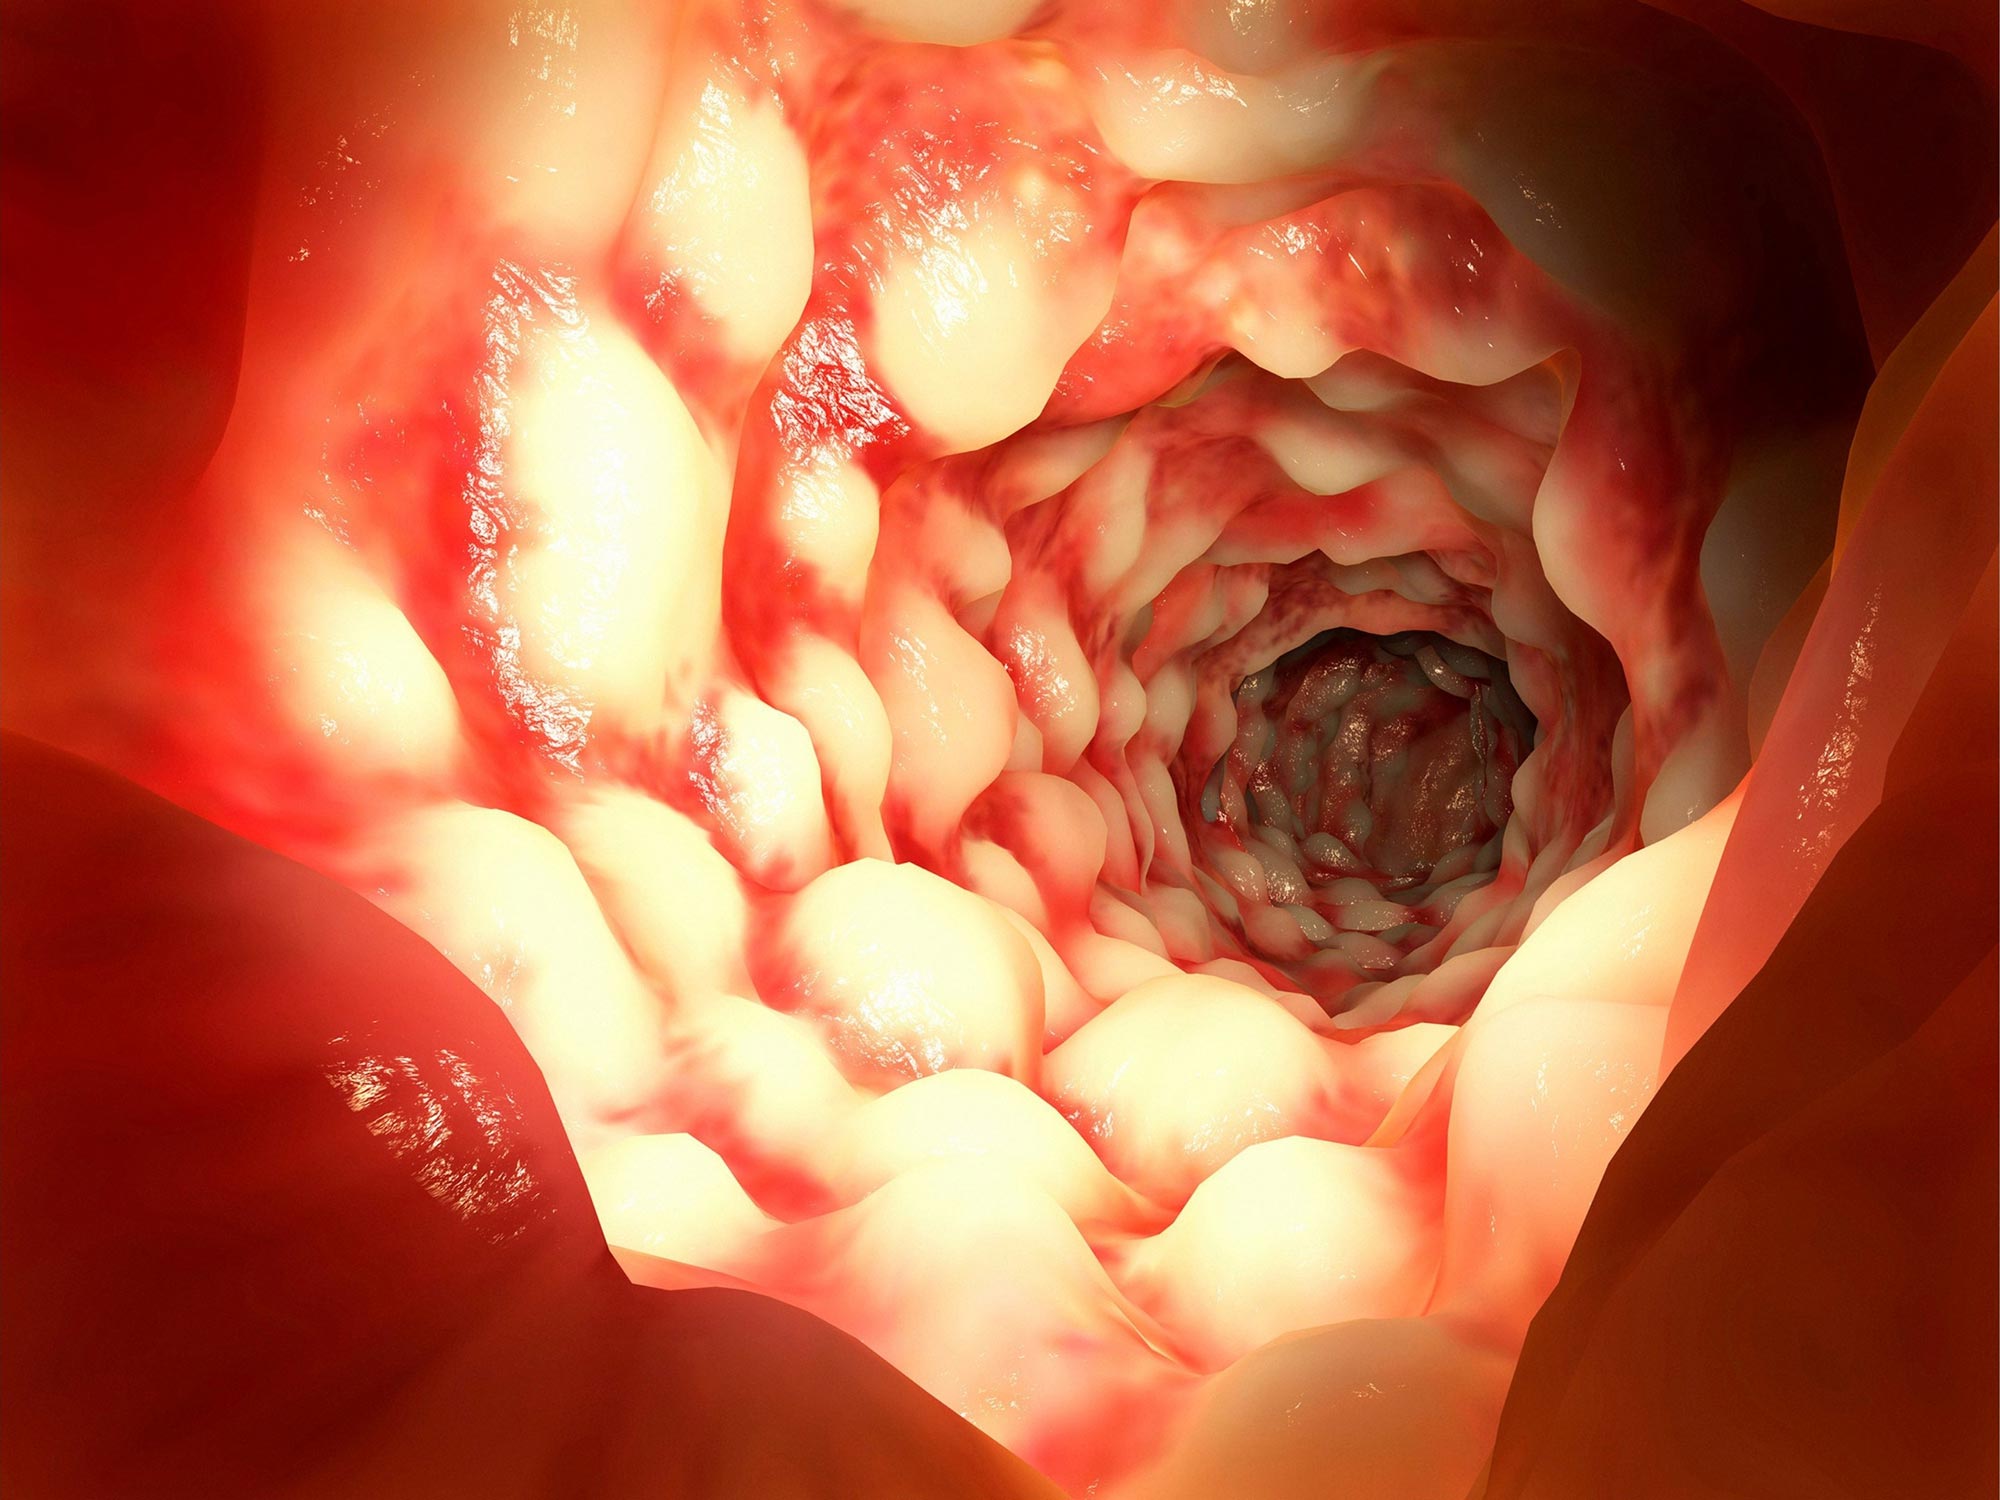 Intestinal Crohn's disease